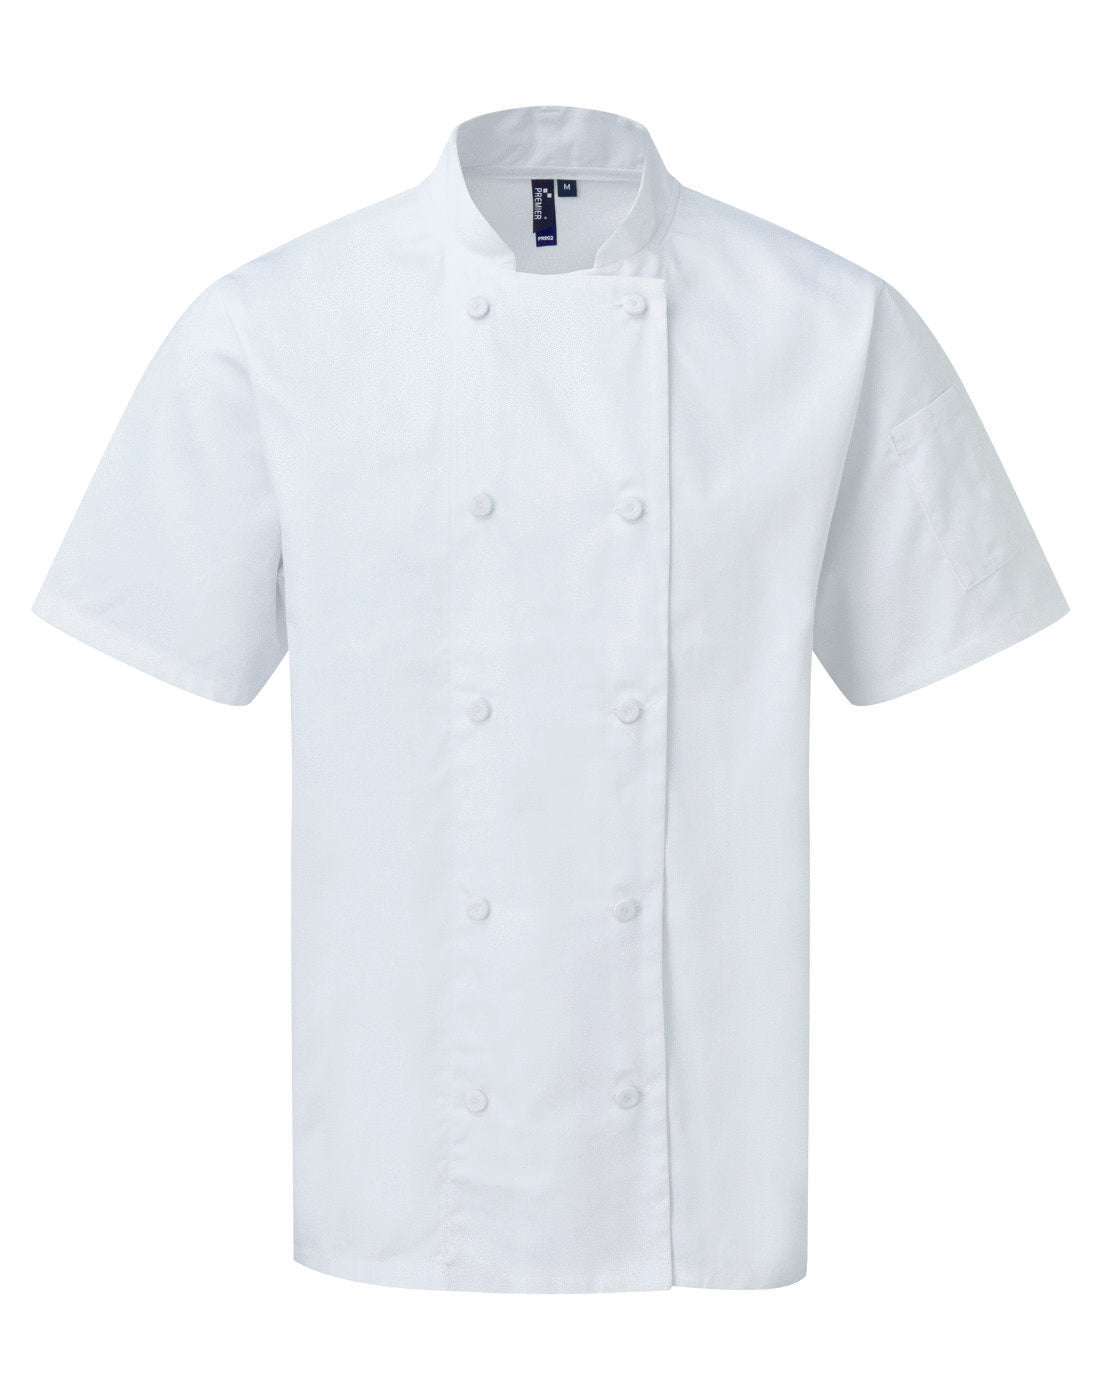 Premier Chef's Short Sleeve Coolchecker® Jacket